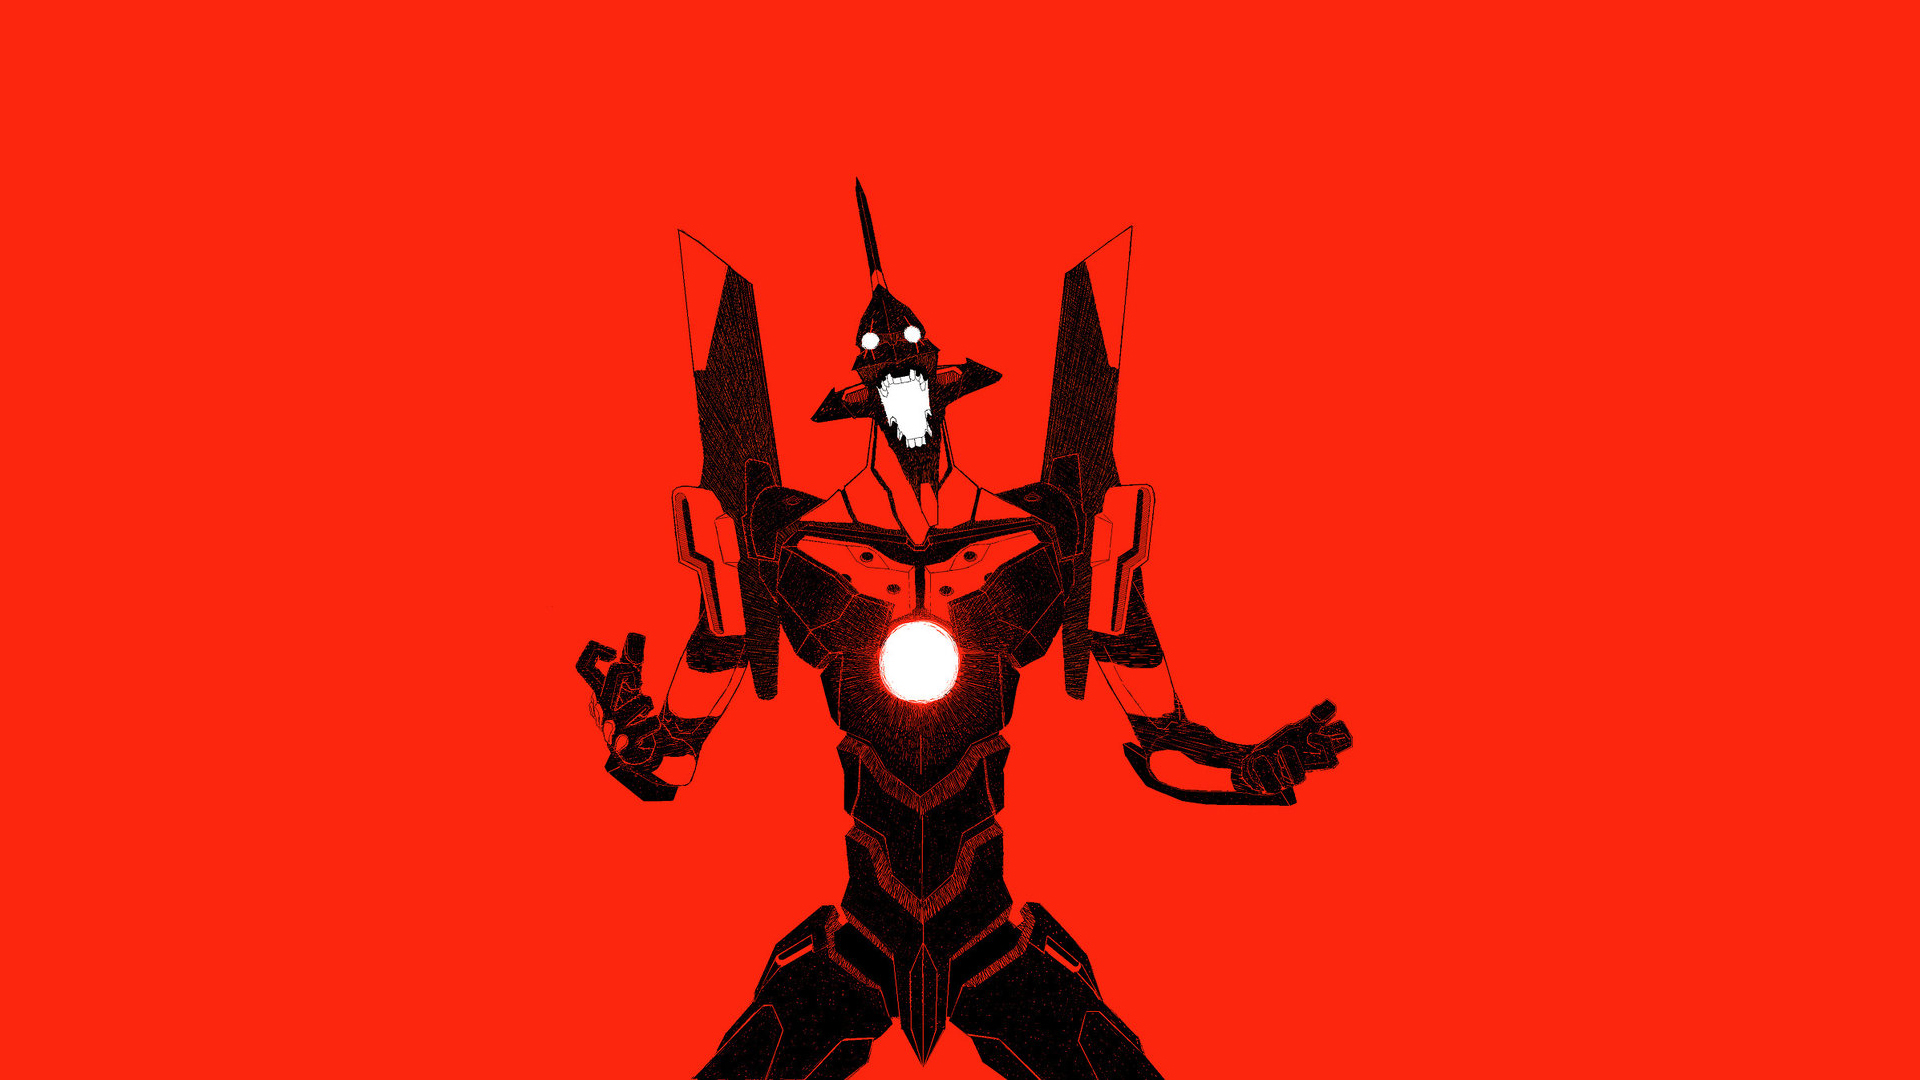 evangelion wallpaper,red,fictional character,superhero,demon,fiction